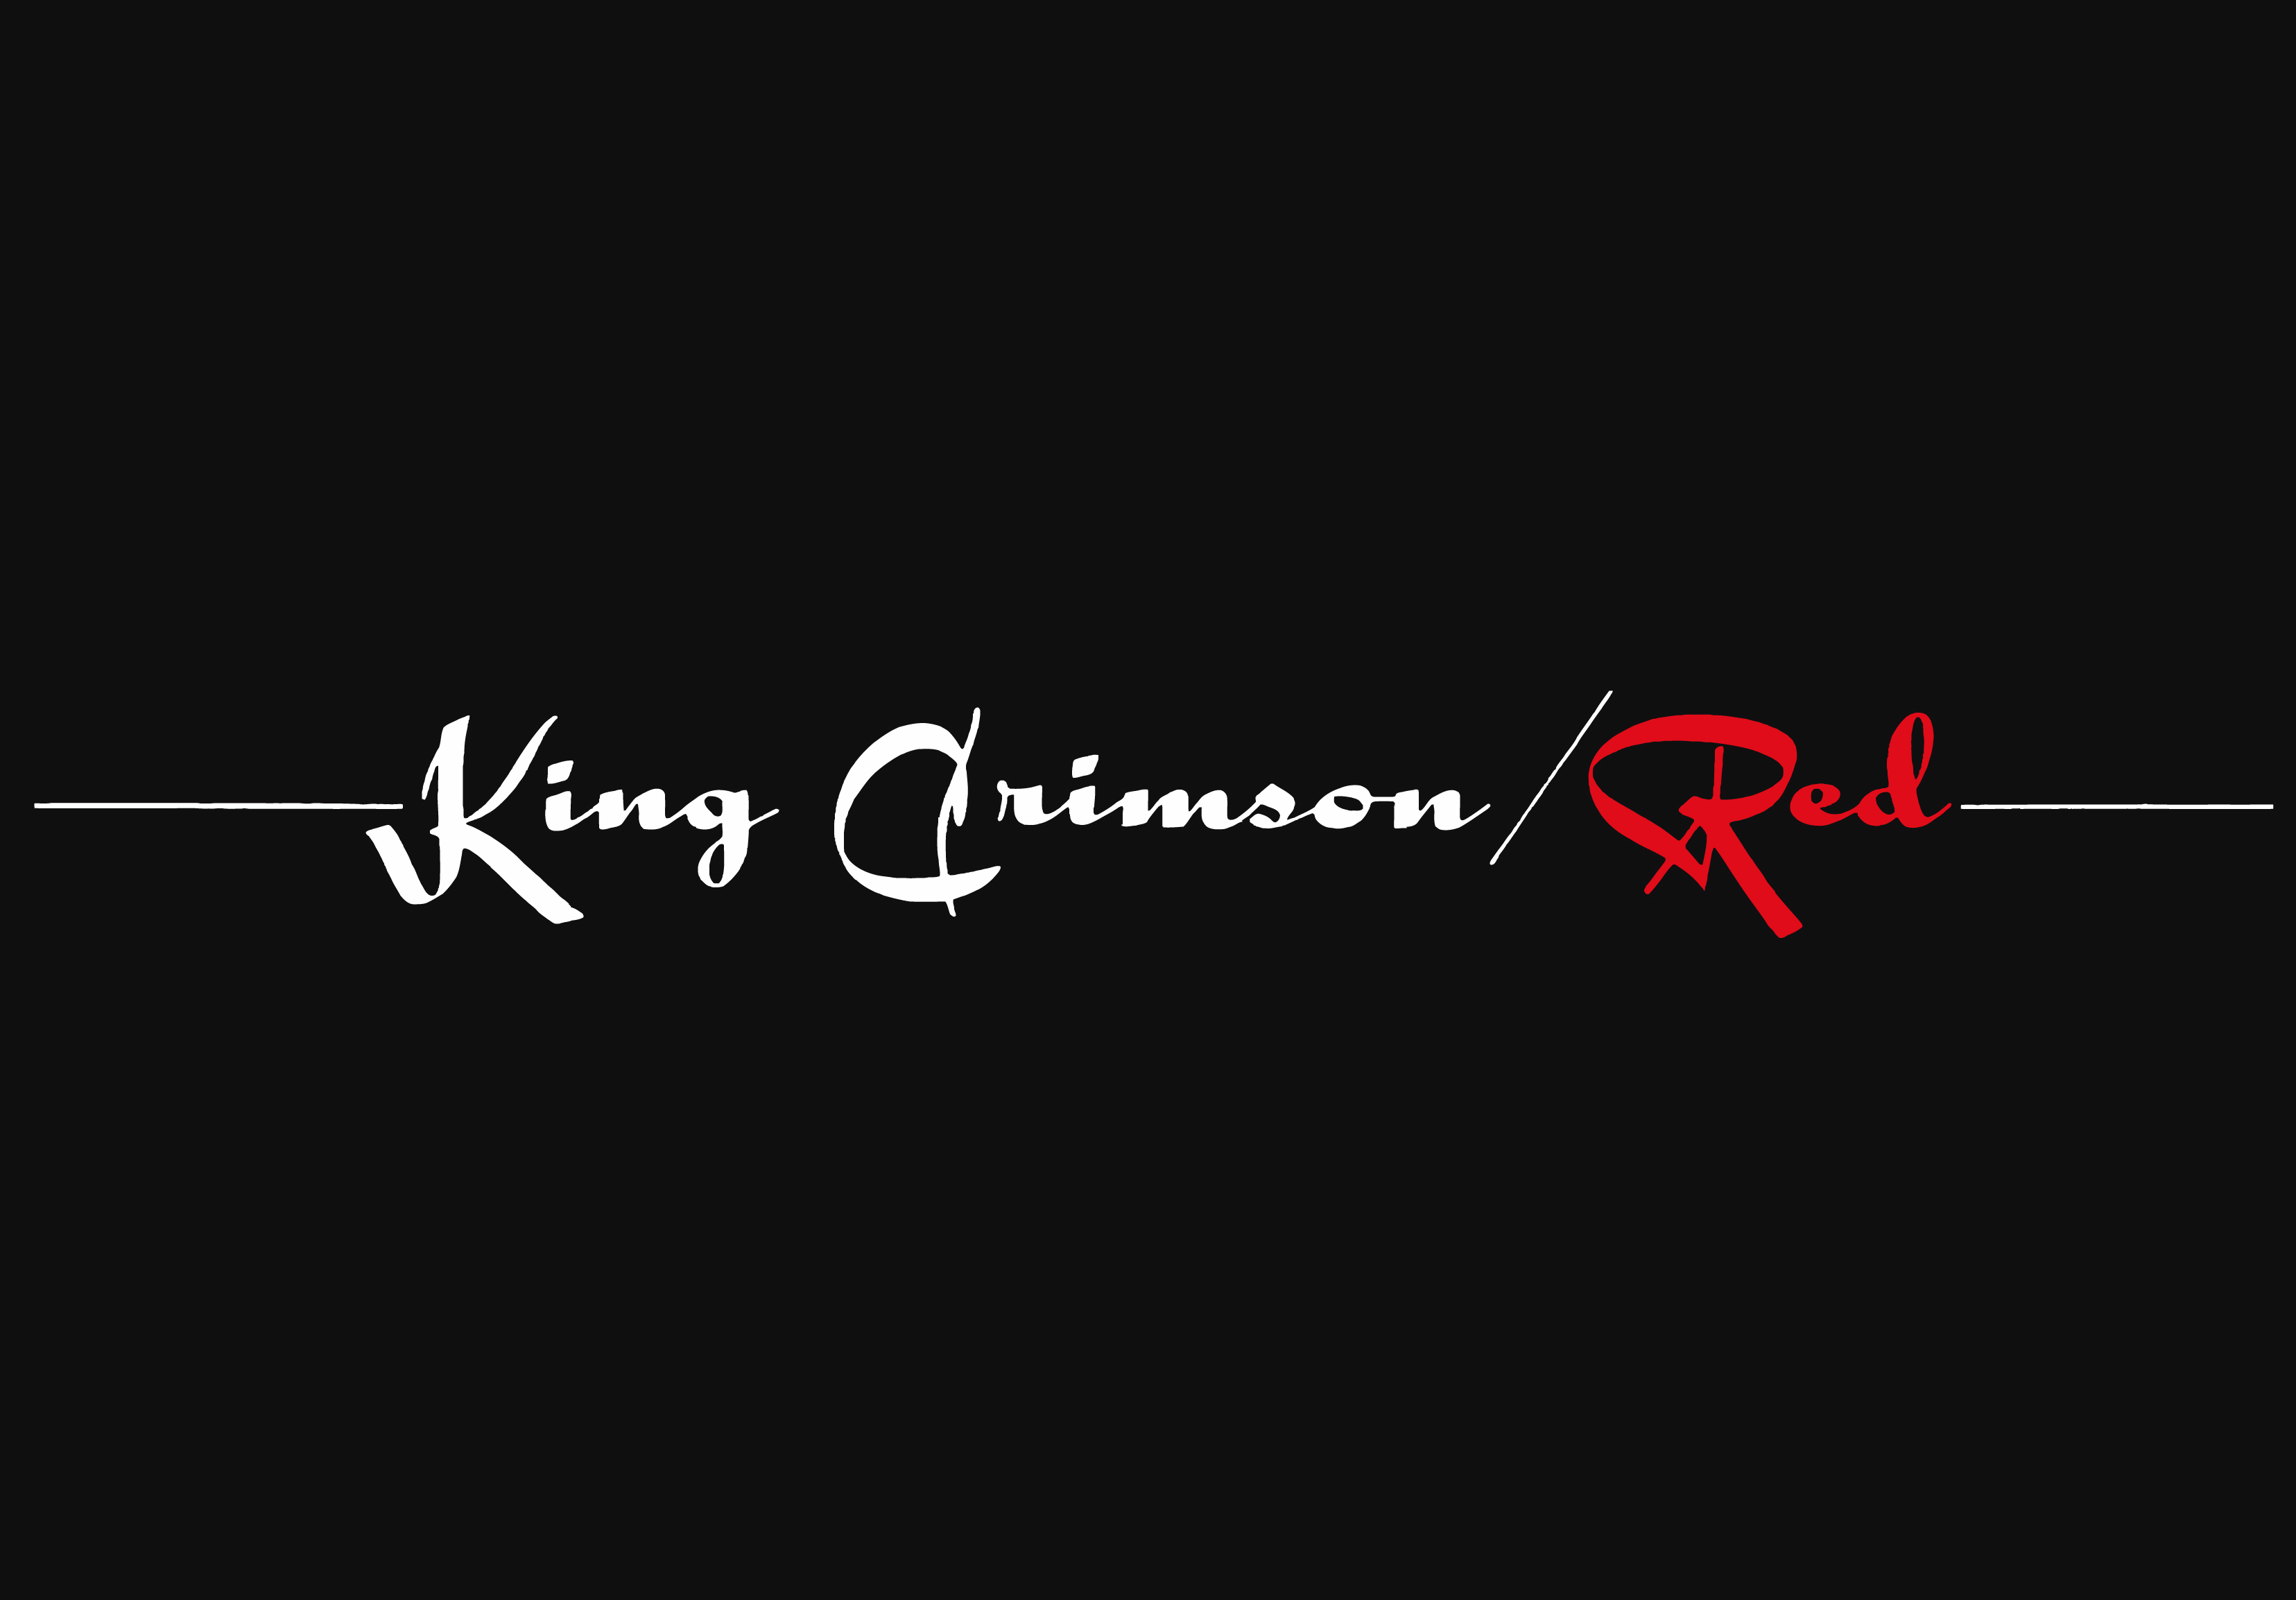 King Crimson Red By Ghigo1972 Customization Wallpaper People Groups